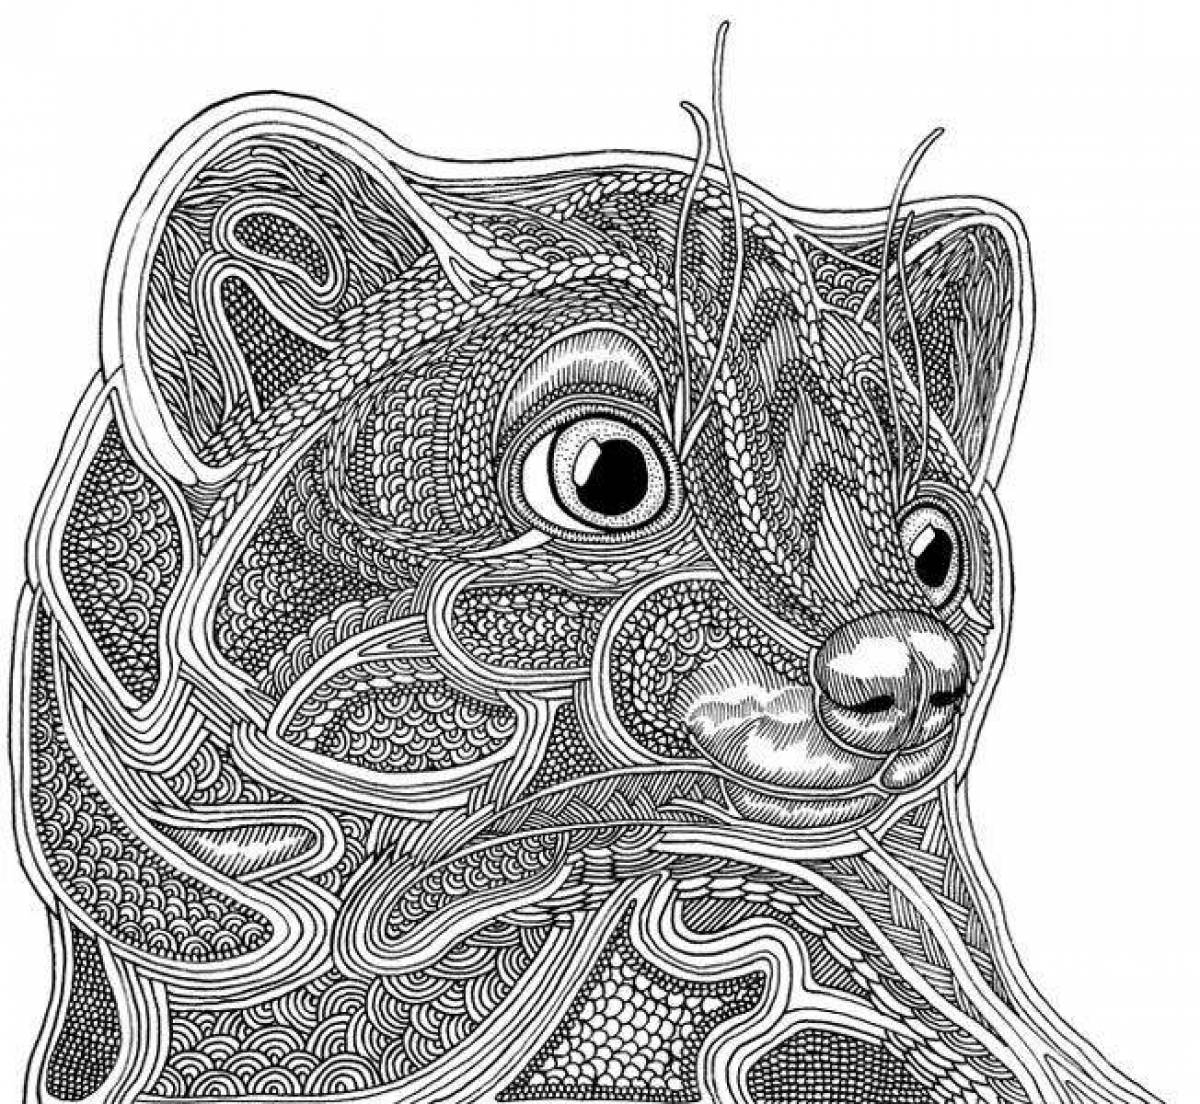 Hamster antistress coloring book